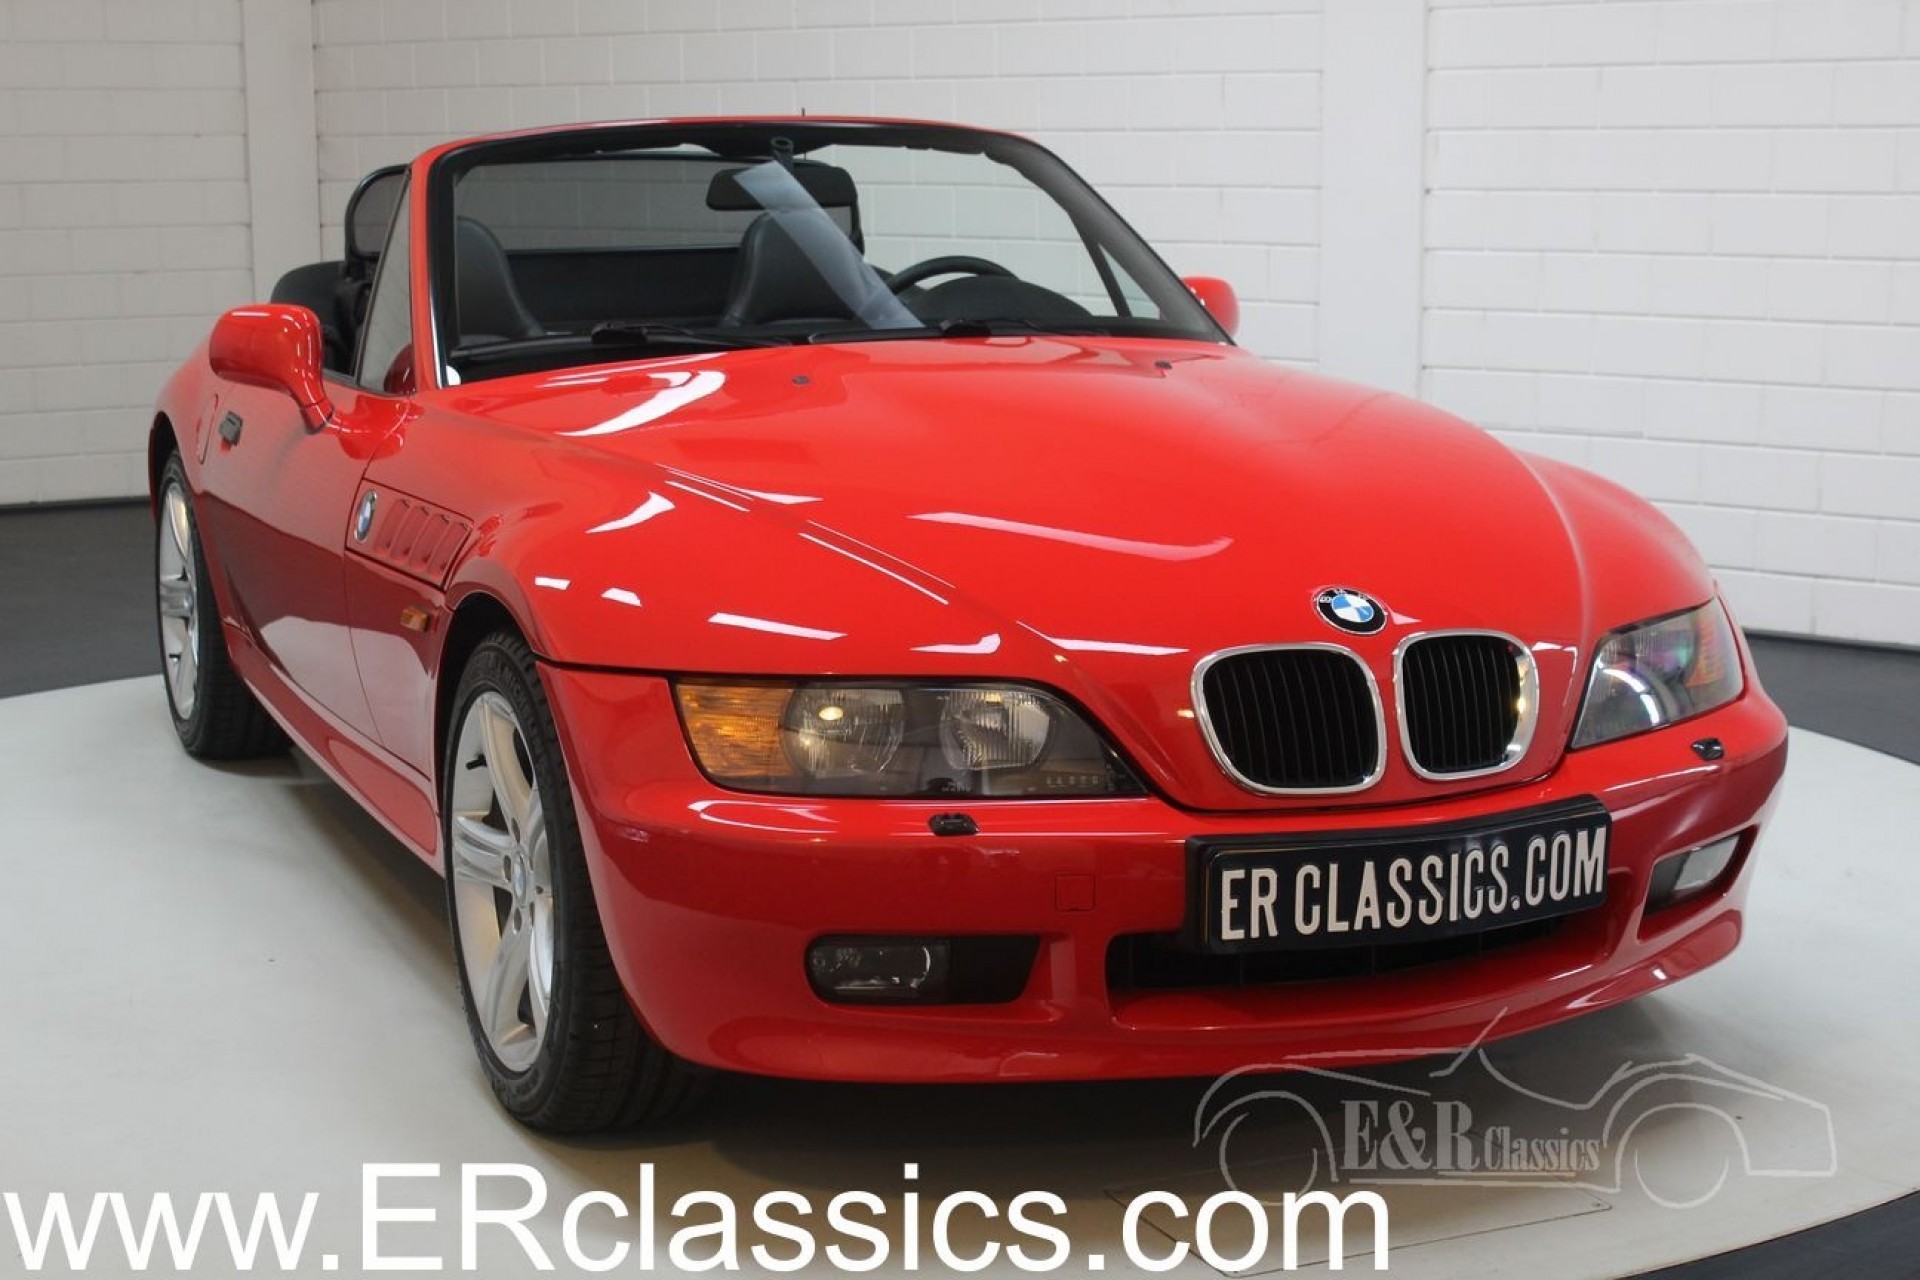 Einde Draak Aanpassen BMW Z3 Roadster 1997 for sale at ERclassics